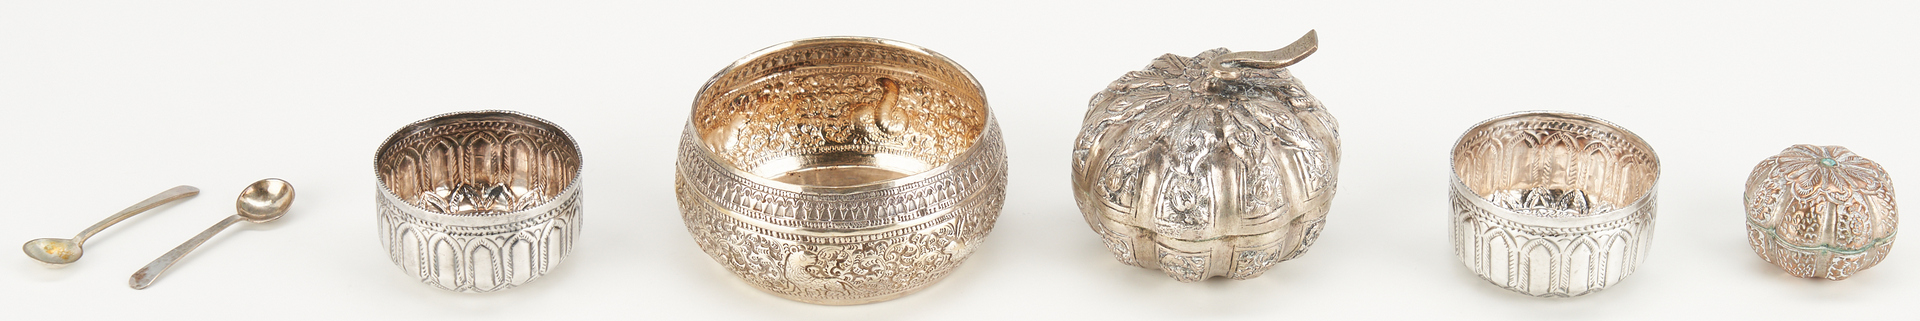 Lot 2: 8 Asian Items, Incl. Bronze Buddha & Burmese Silver